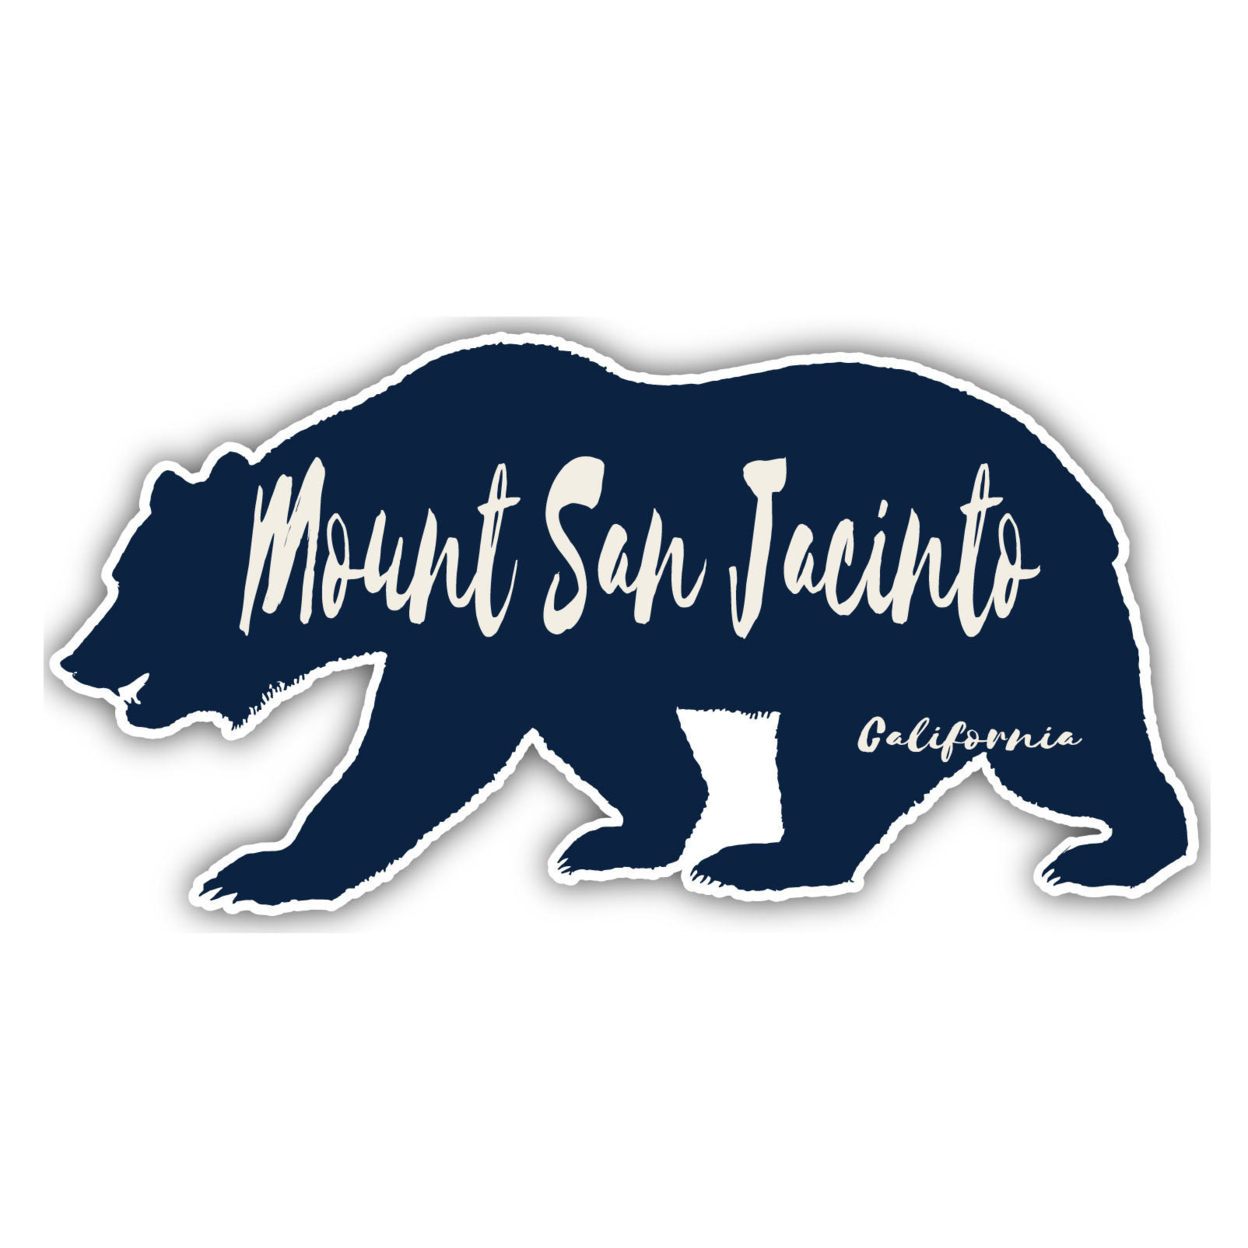 Mount San Jacinto California Souvenir Decorative Stickers (Choose Theme And Size) - Single Unit, 4-Inch, Tent